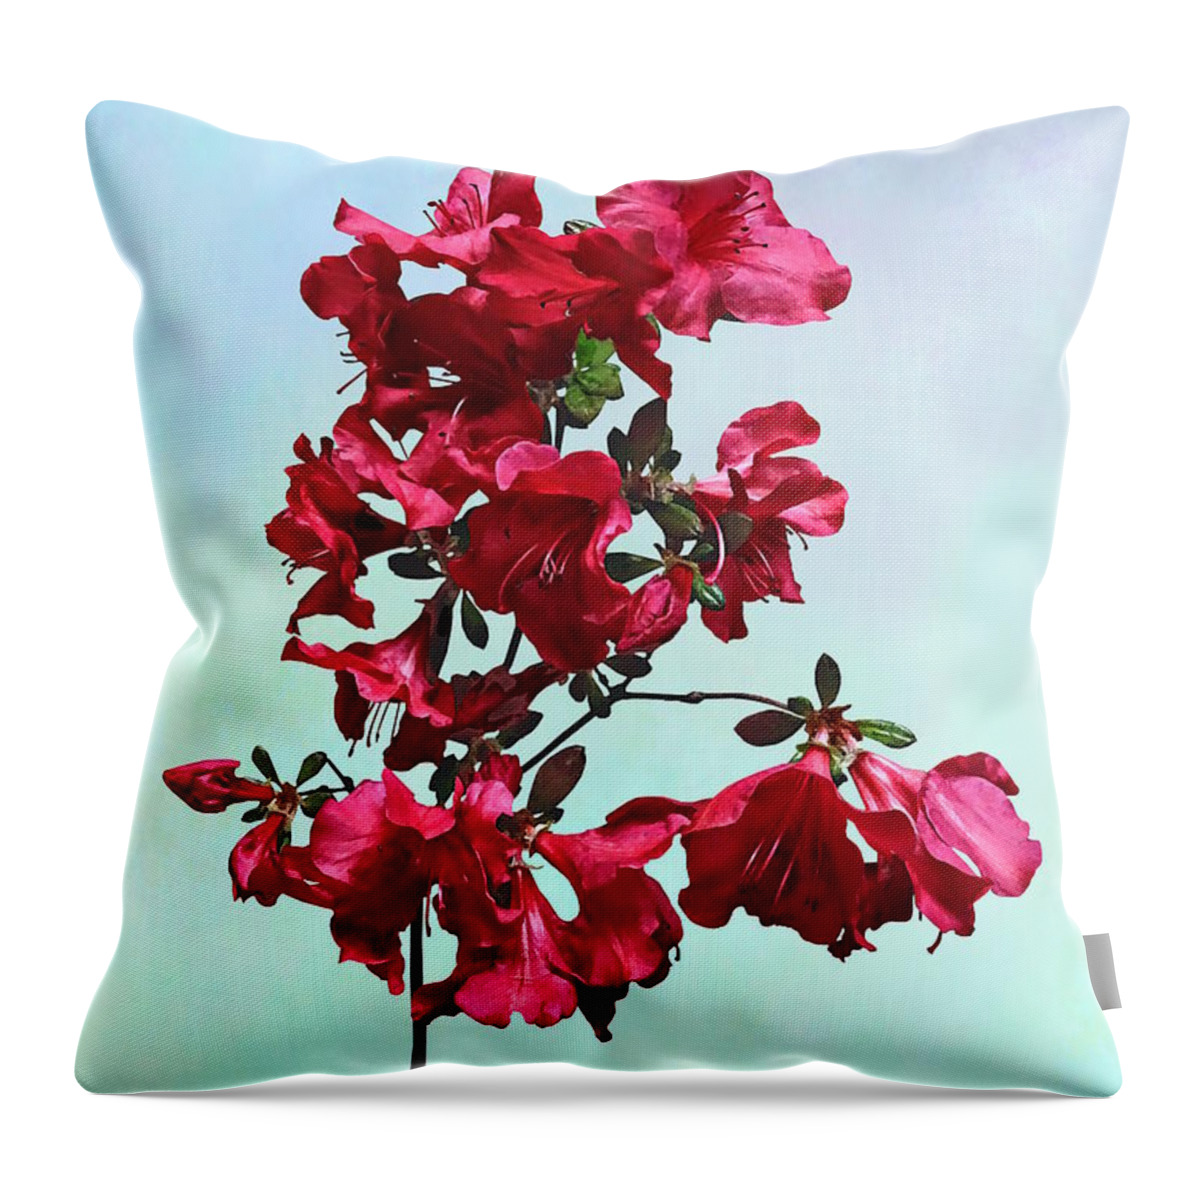 Azaleas Throw Pillow featuring the photograph Dark Pink Azaleas by Susan Savad